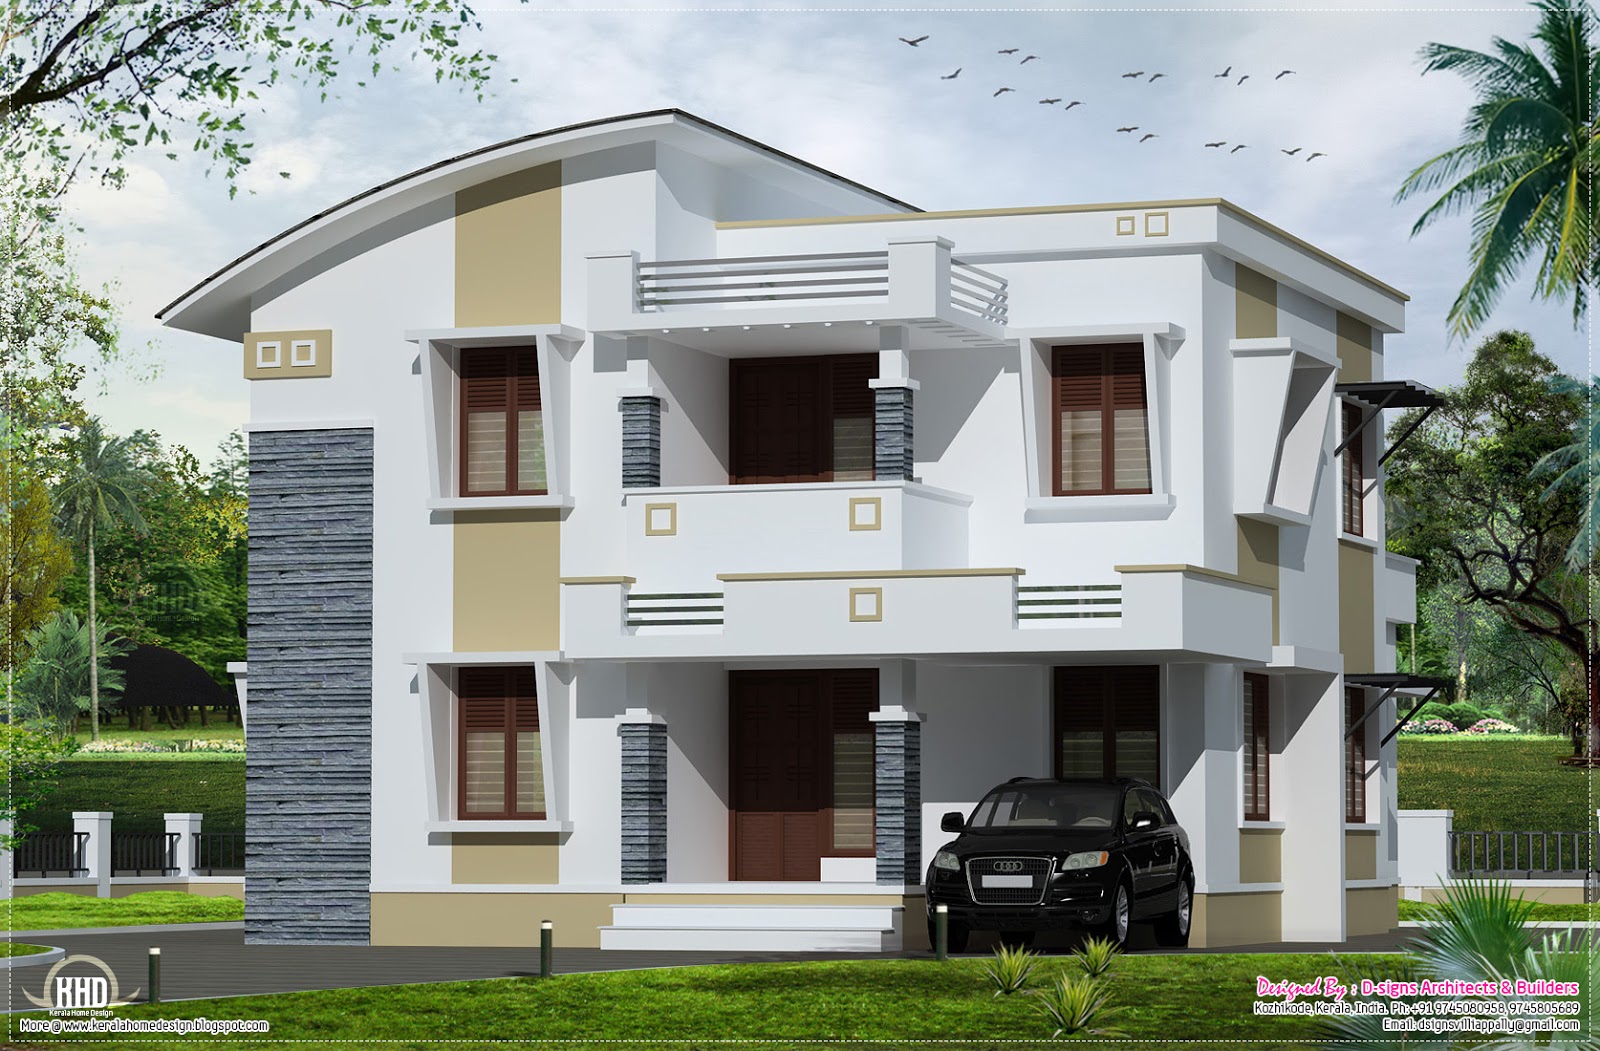  Simple  flat  roof  home  design  in 1800 sq feet Kerala home  